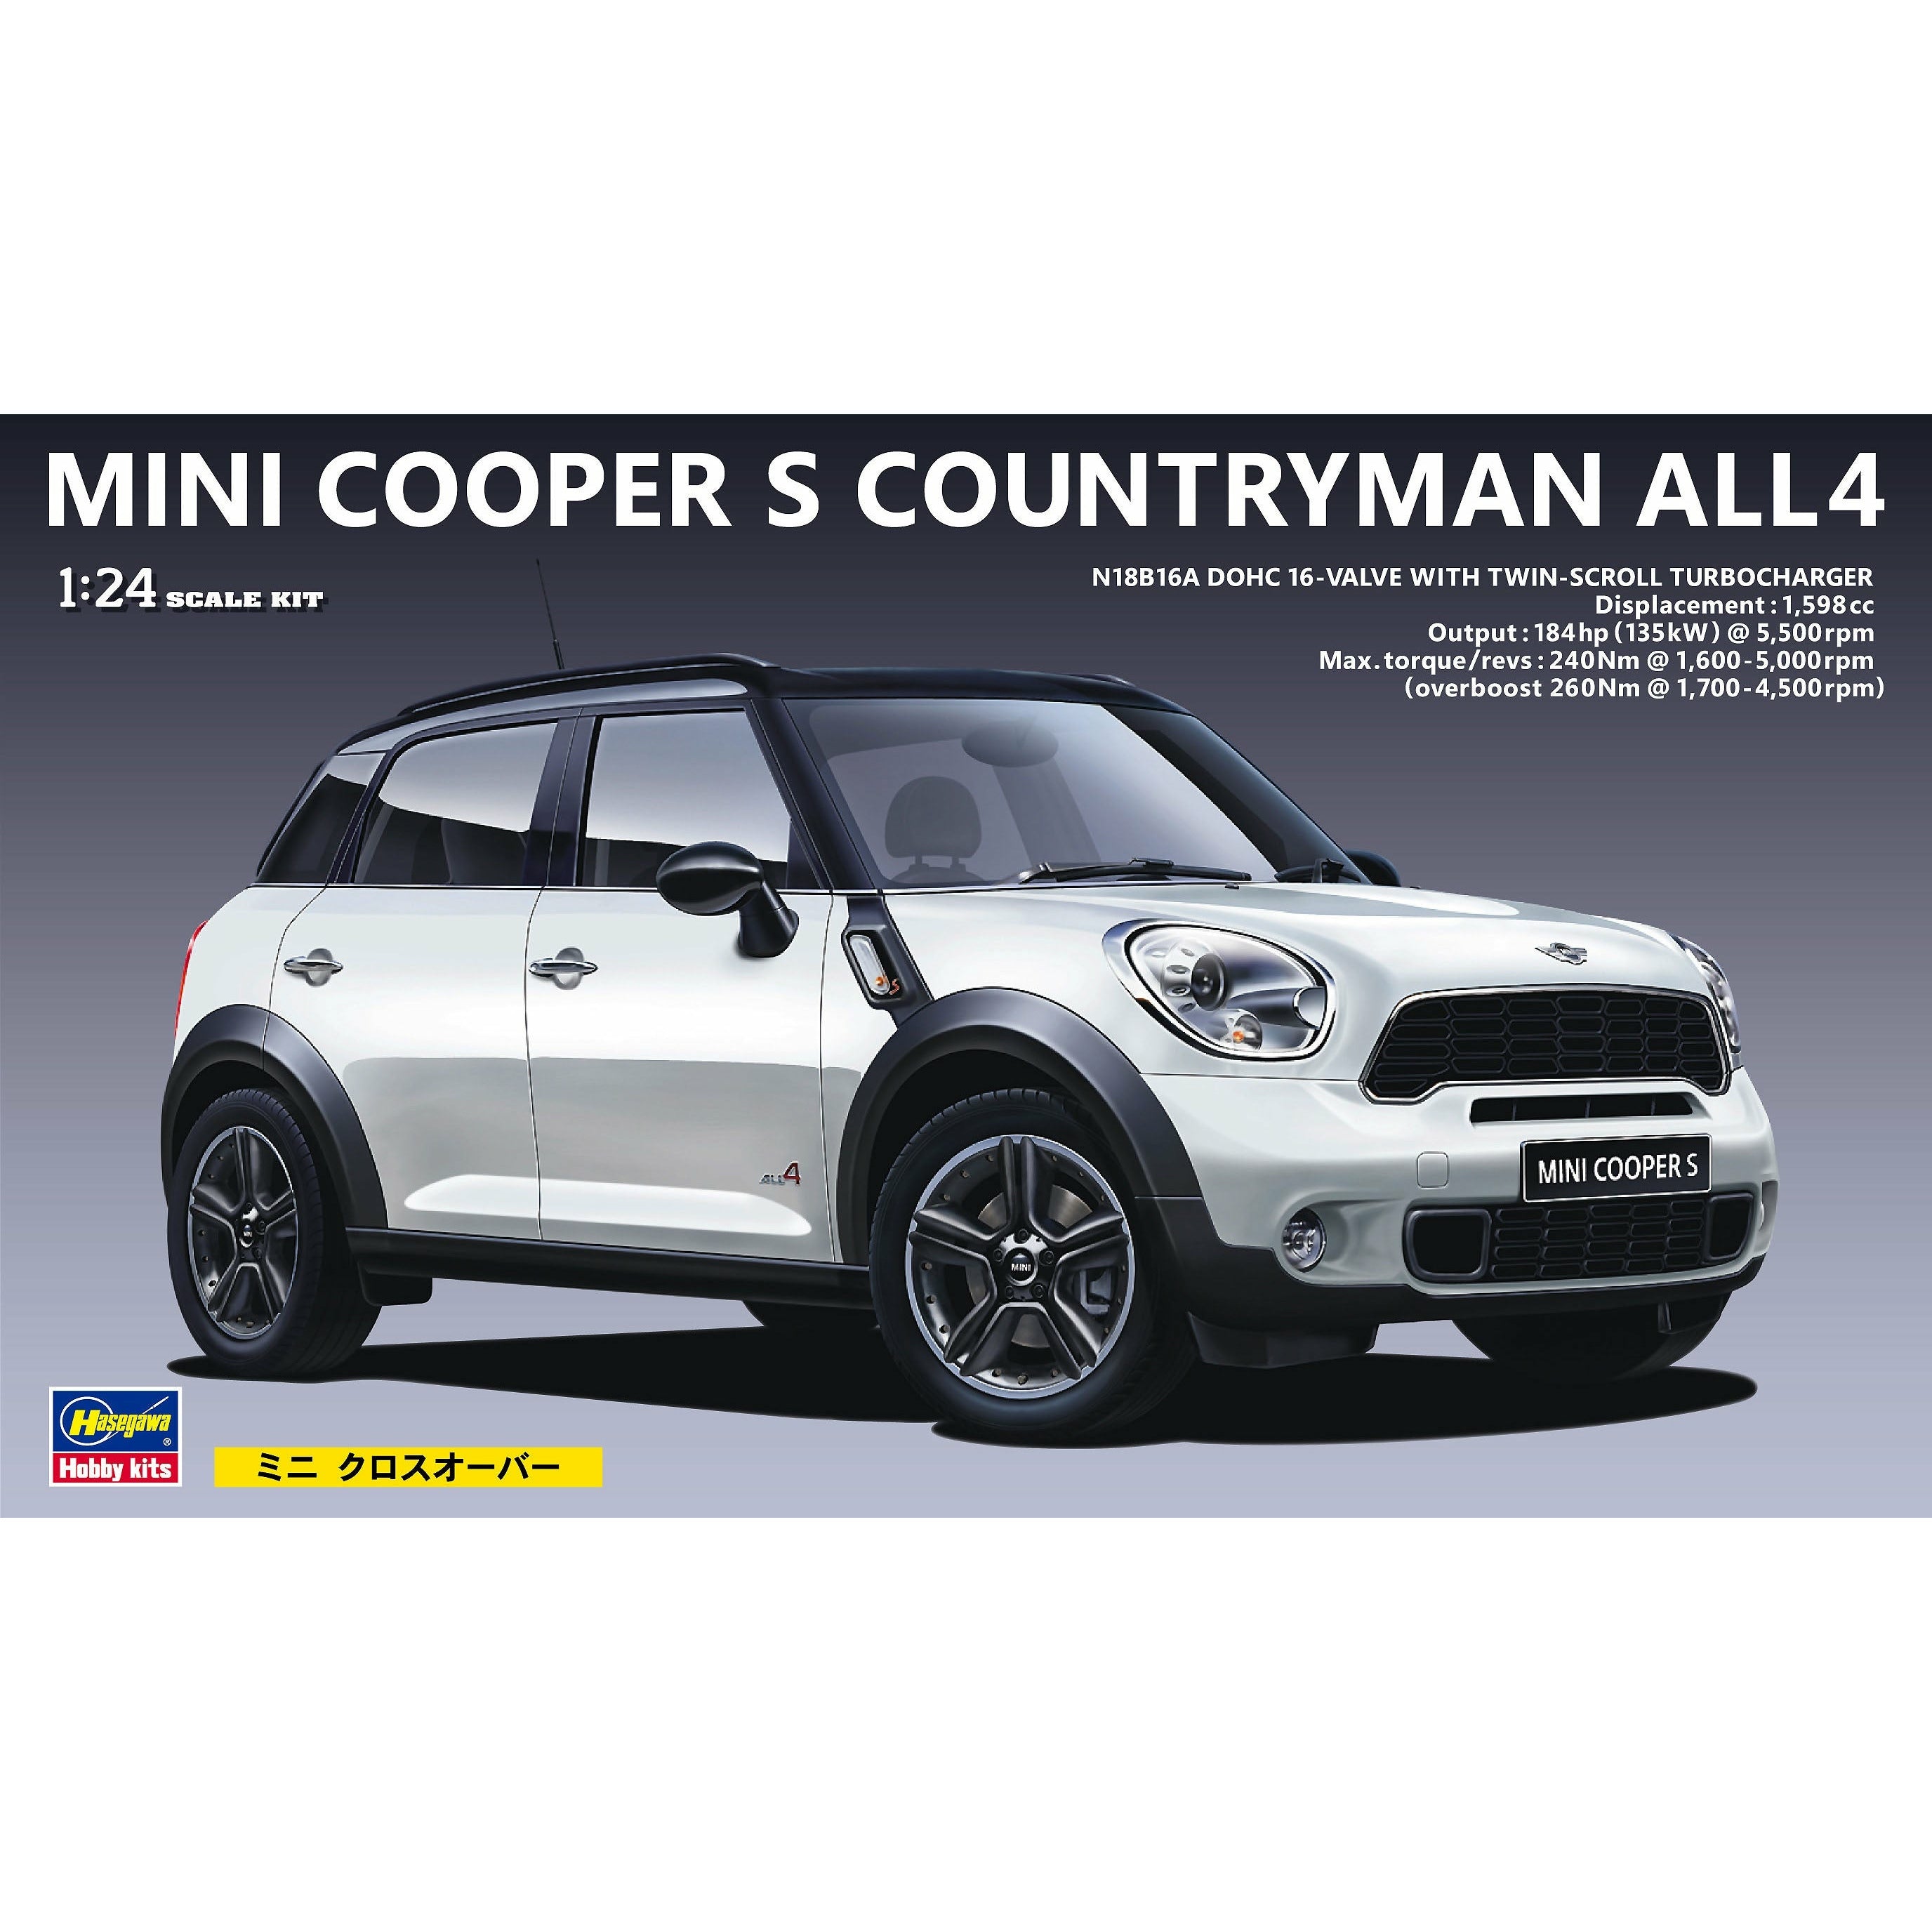 Mini Cooper S Countryman All4 1/24 #24121 by Hasegawa